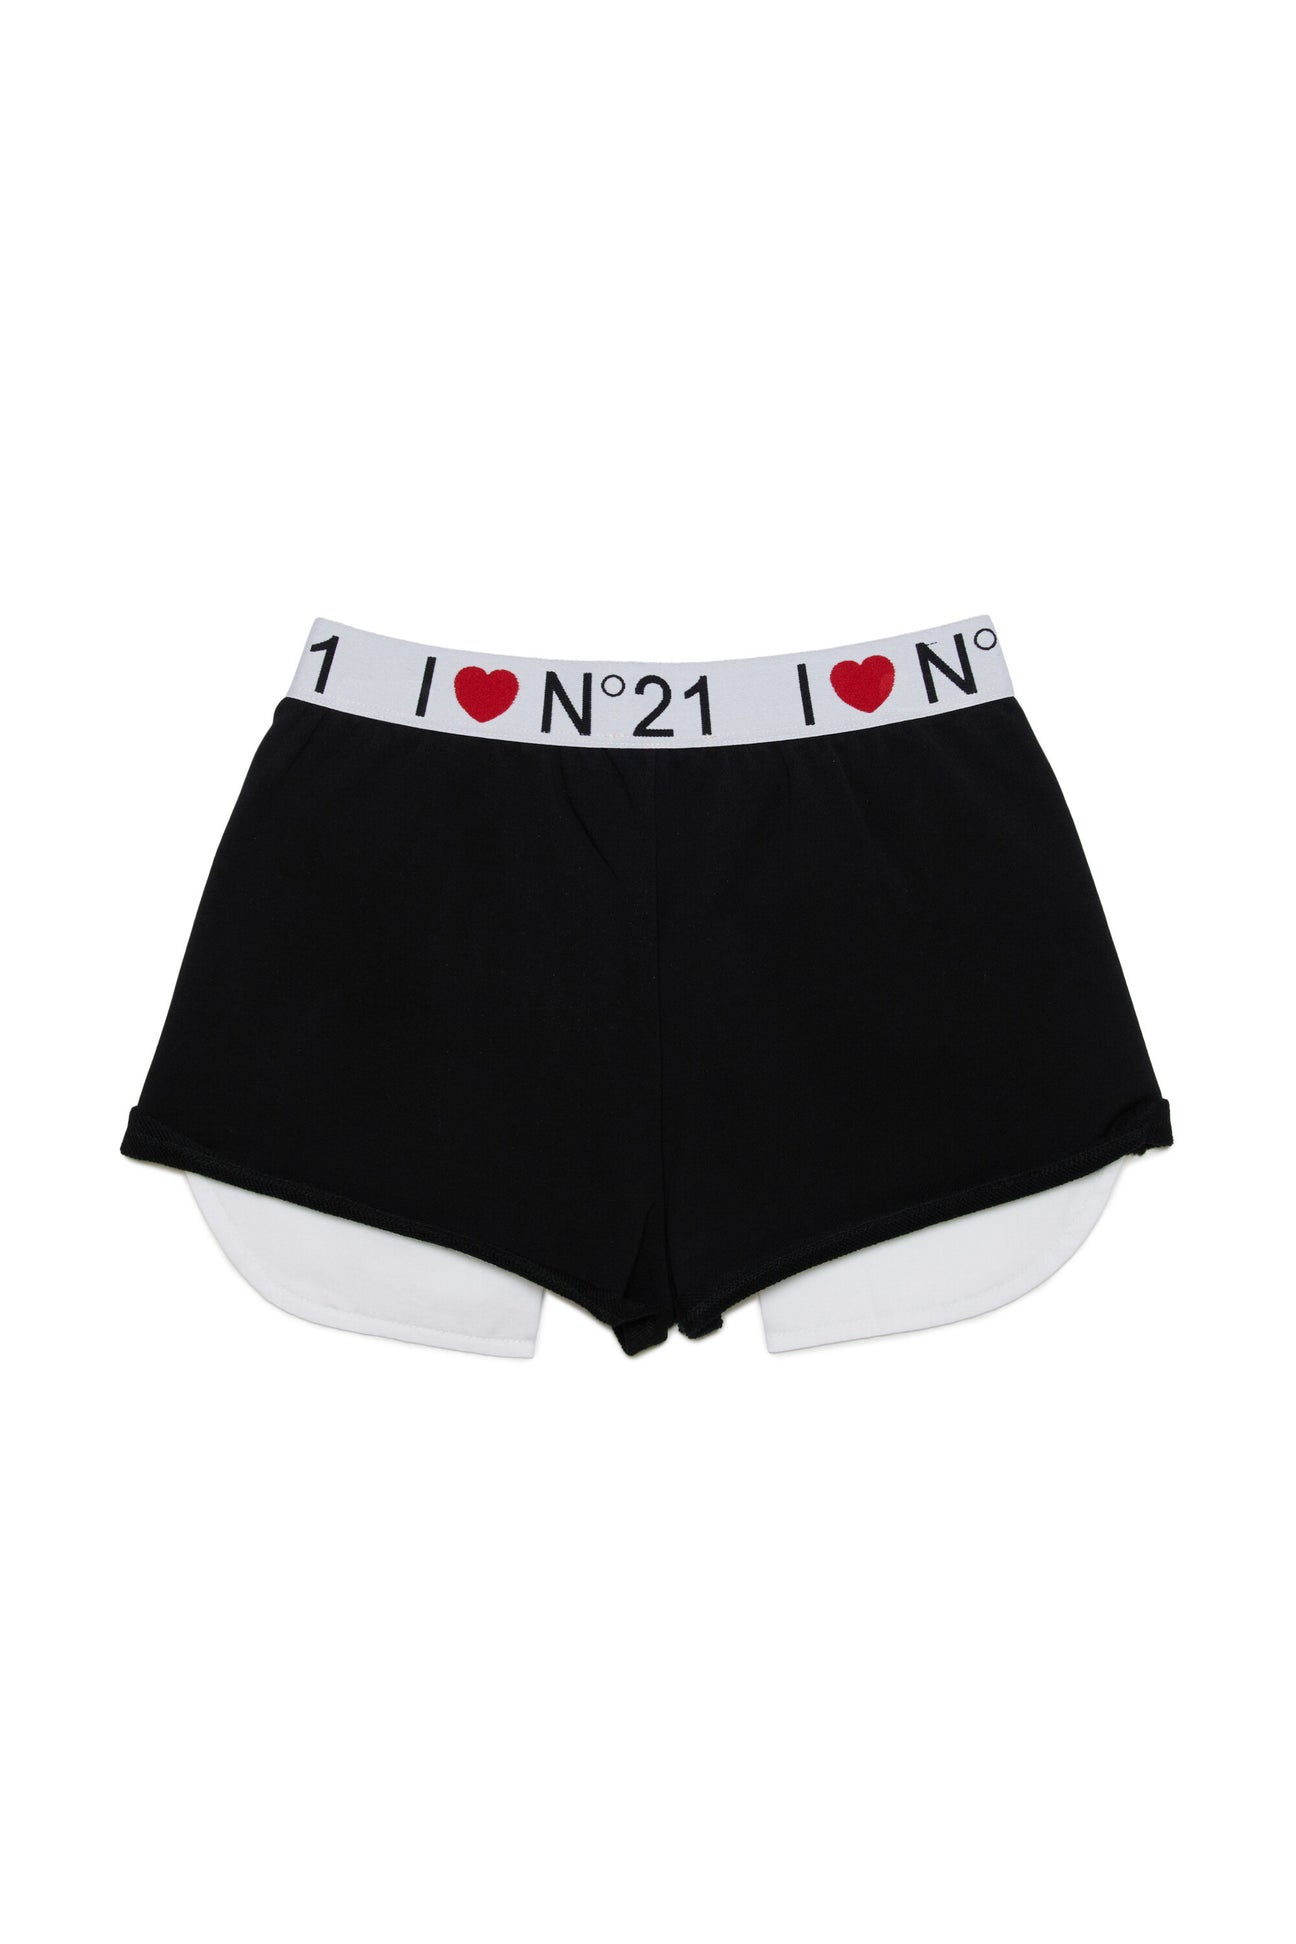 Fleece shorts branded with I Love N°21 logo Fleece shorts branded with I Love N°21 logo